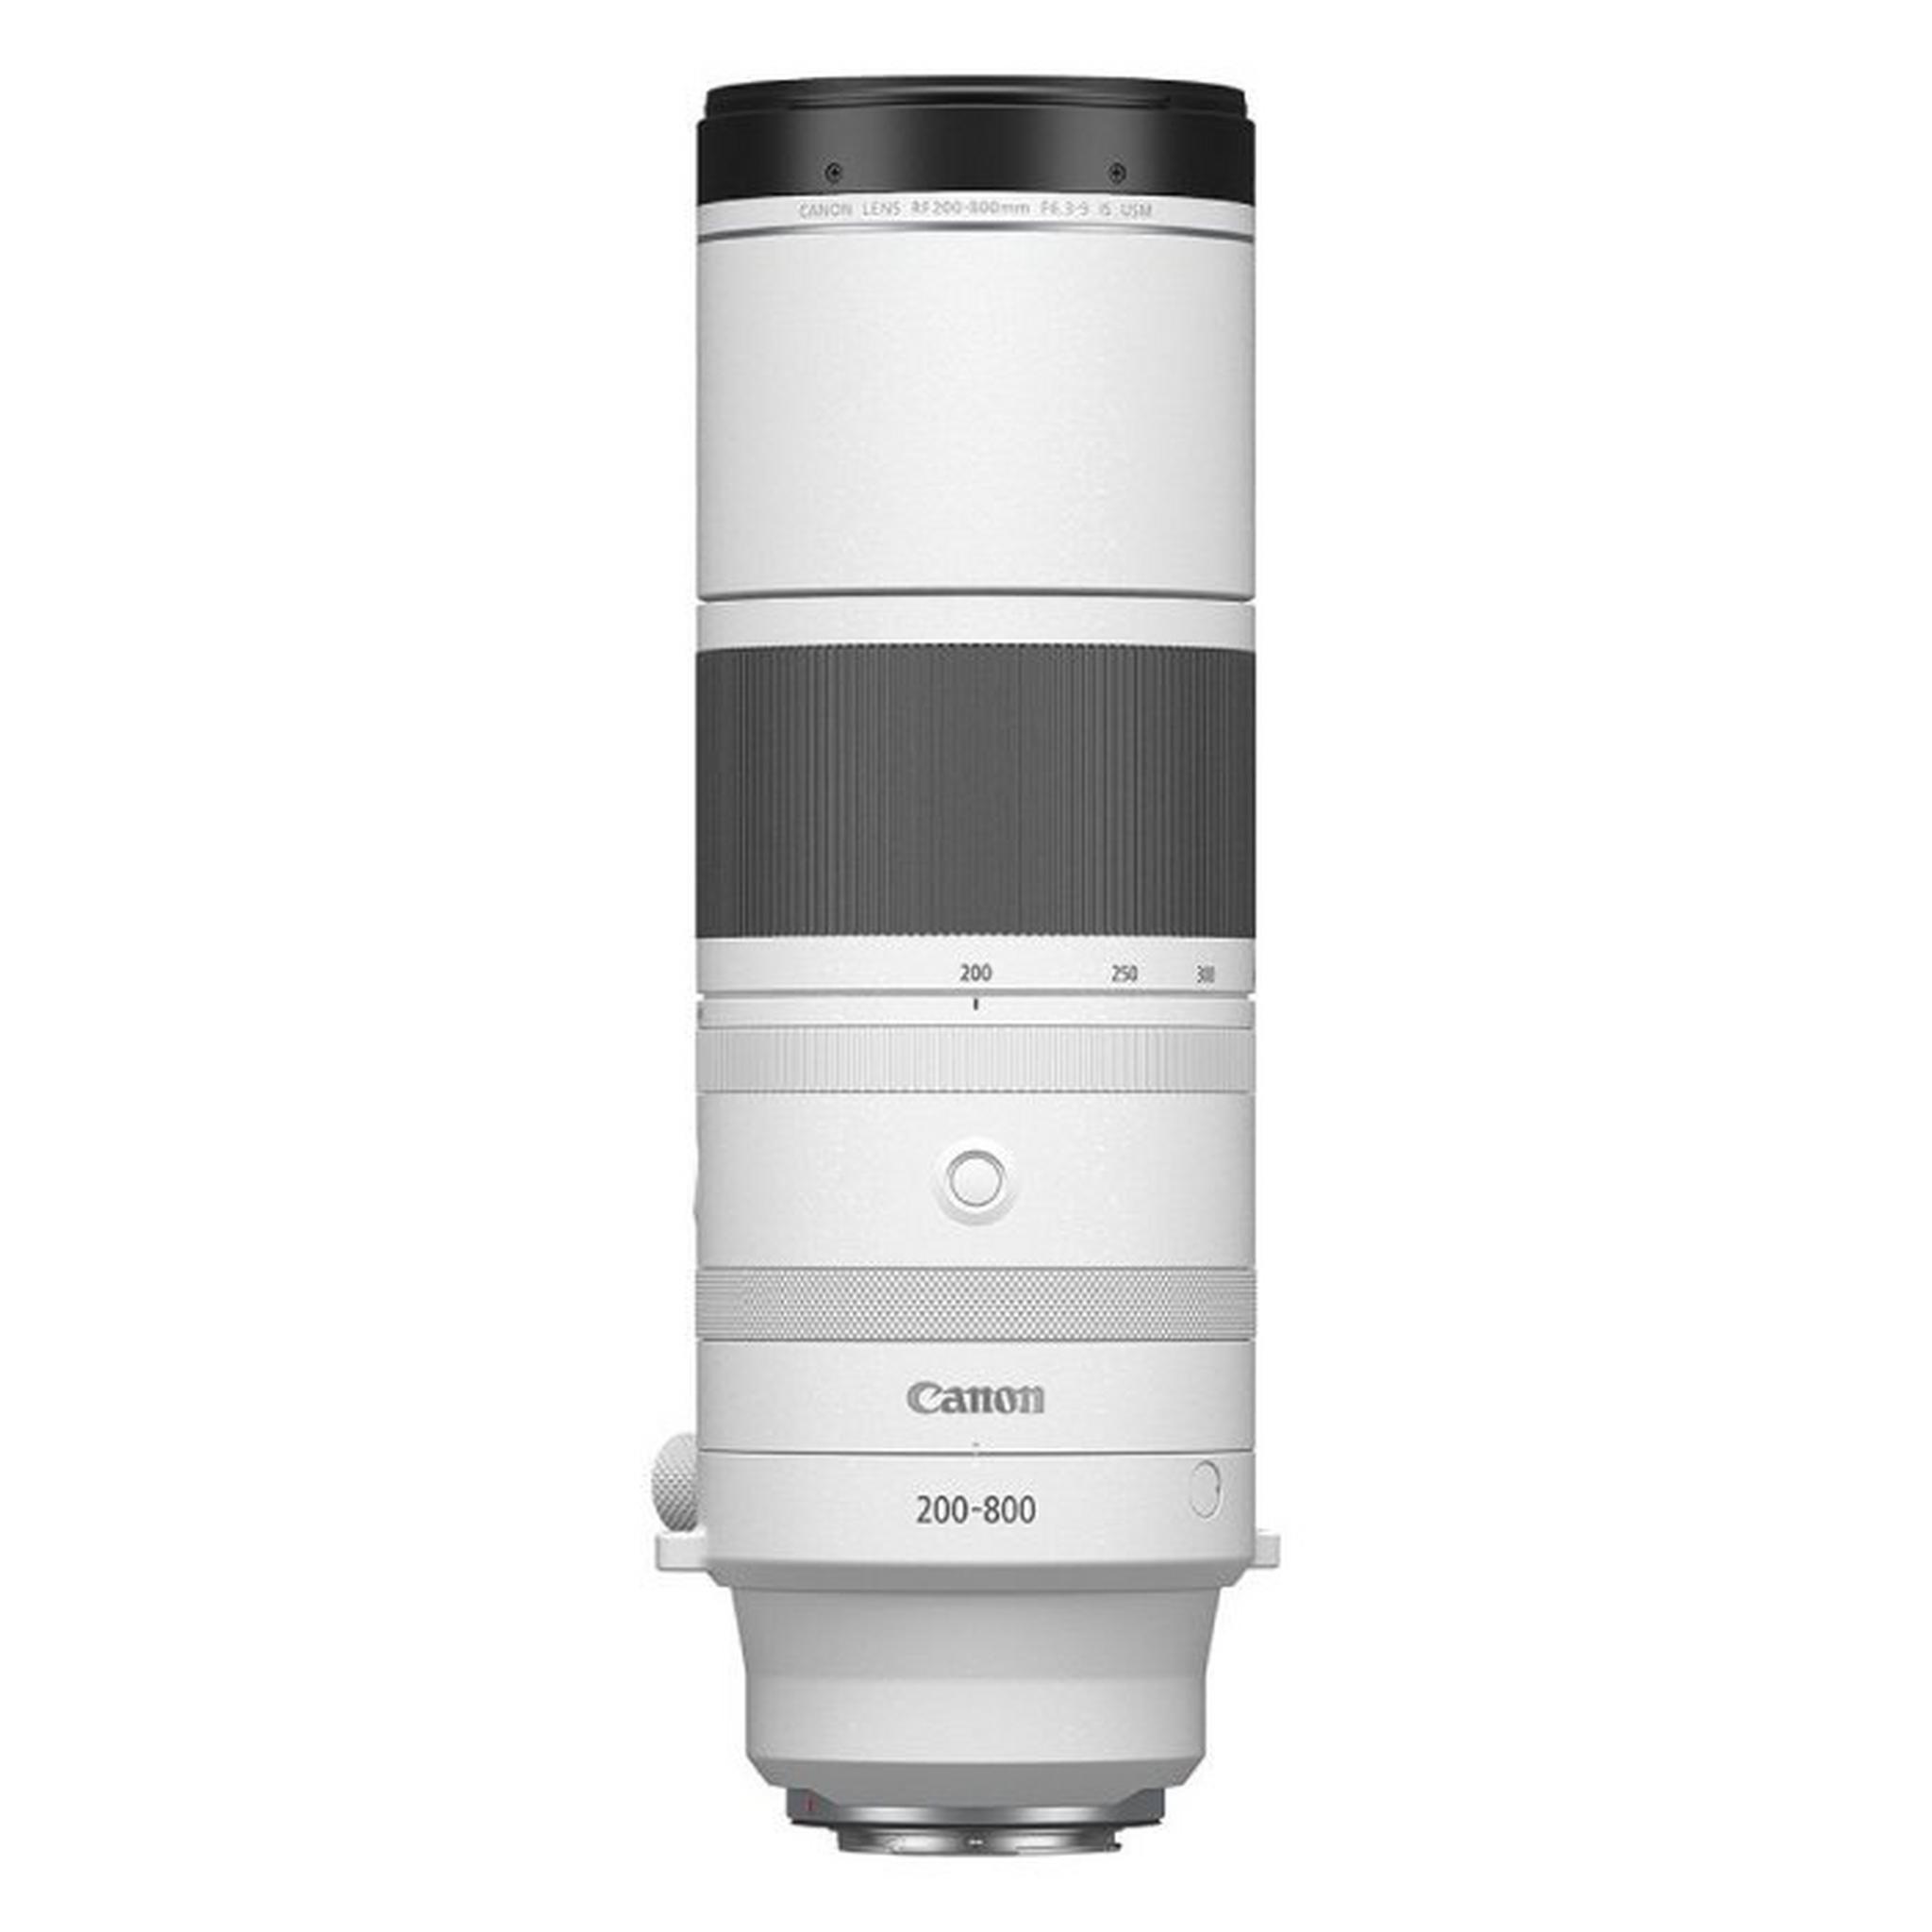 CANON RF 200-800MM Telephotozoom Lens, F6.3-9 IS USM, 6263C005AA – White